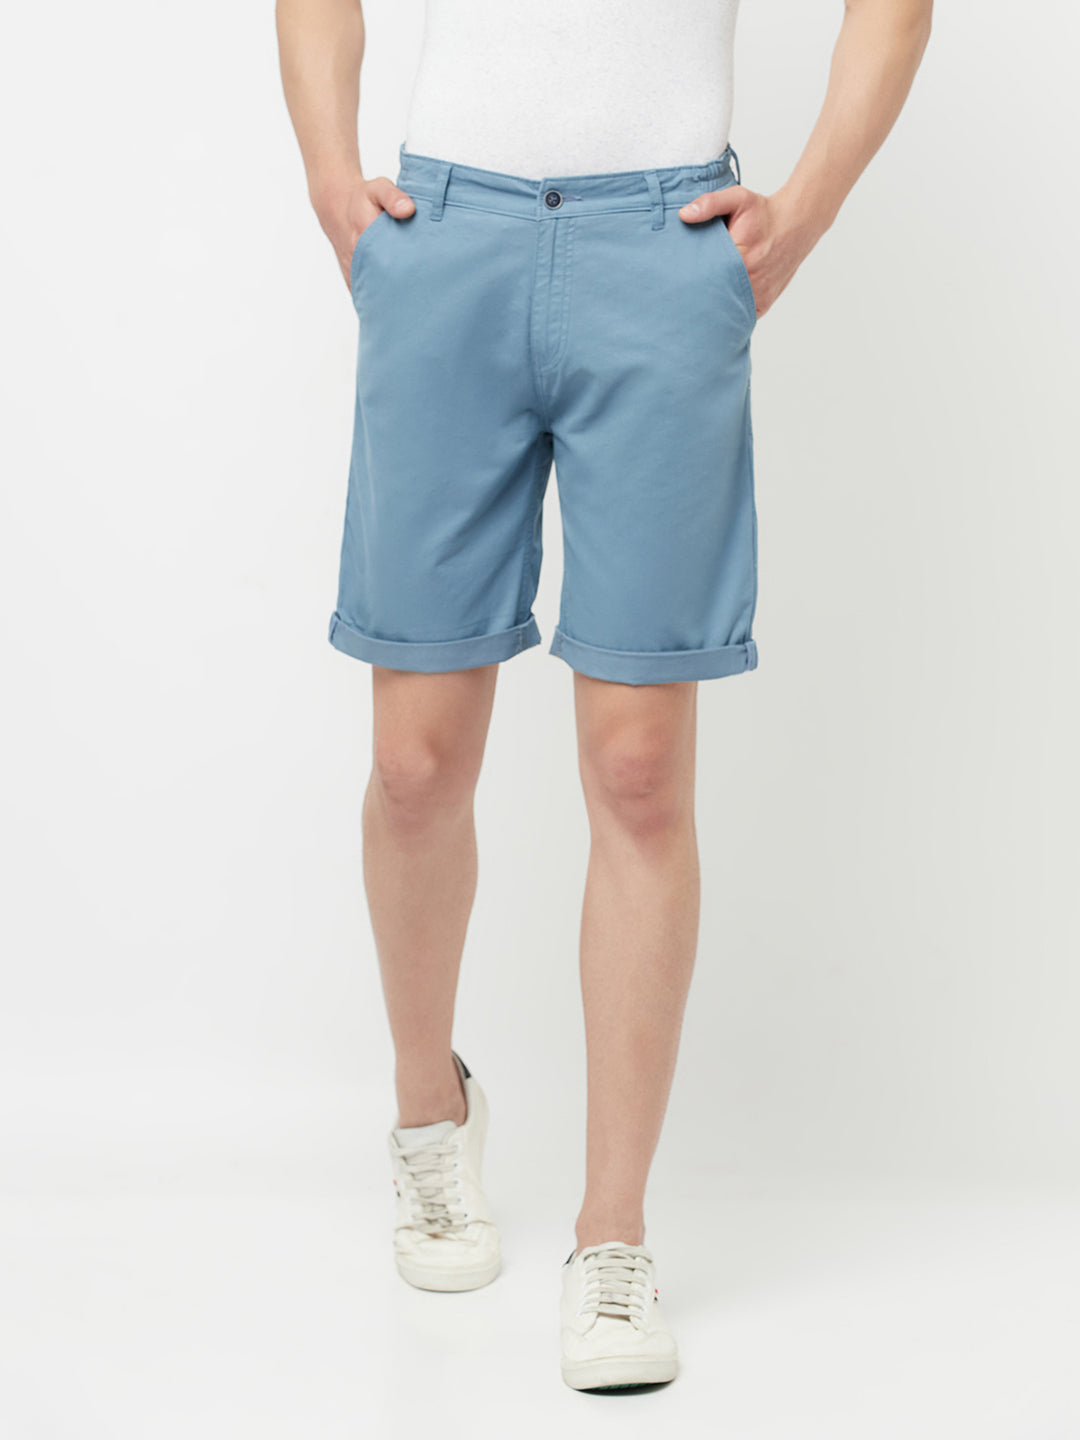 Blue Shorts - Men Shorts